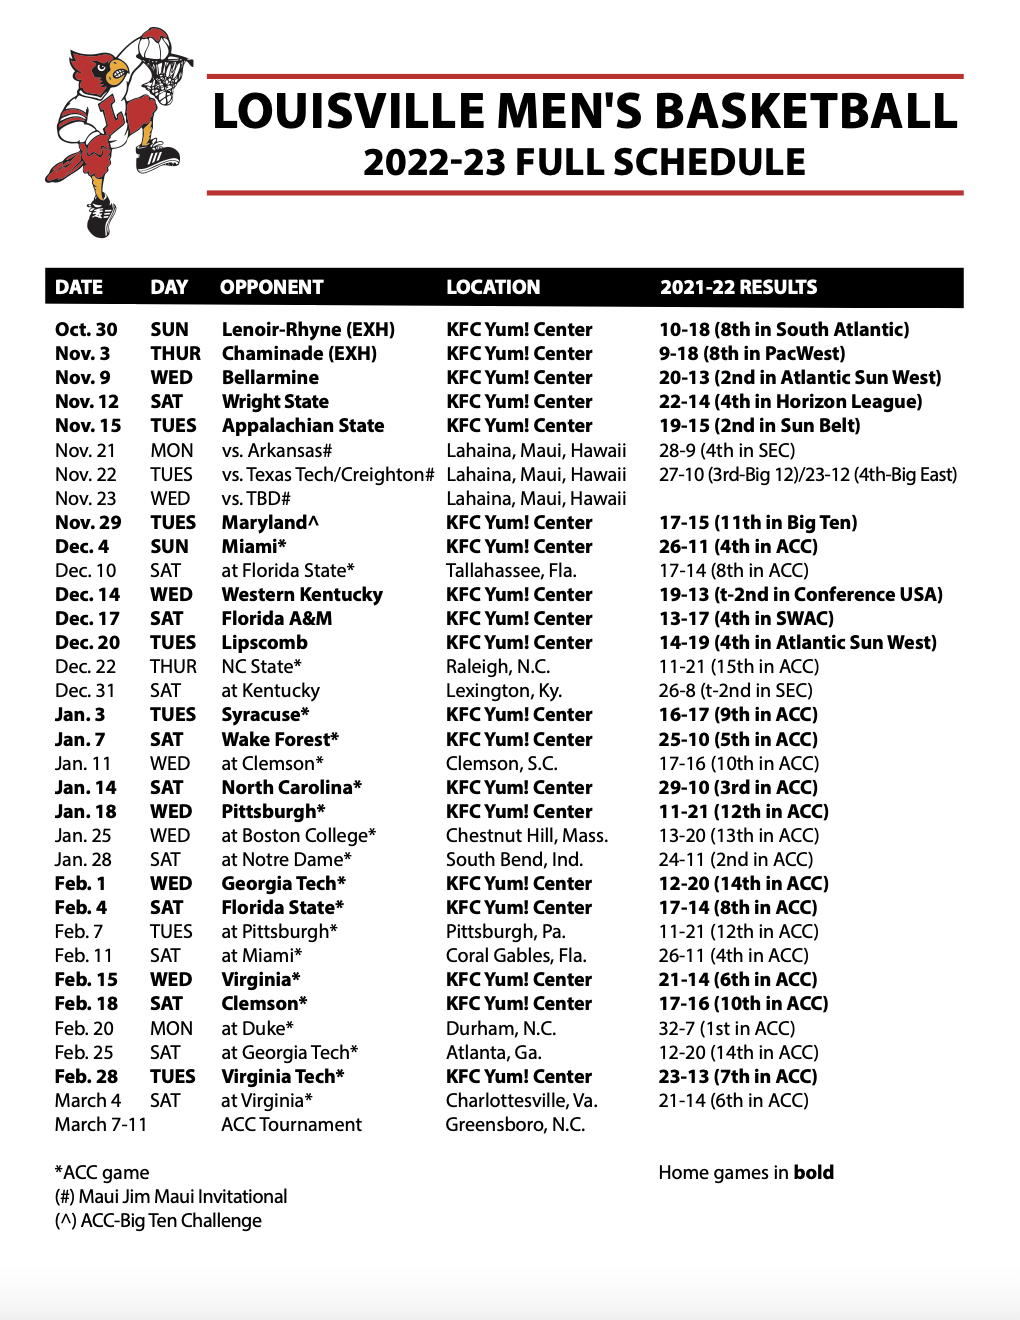 Louisville vs, NC State Men's Basketball Highlights (2021-22